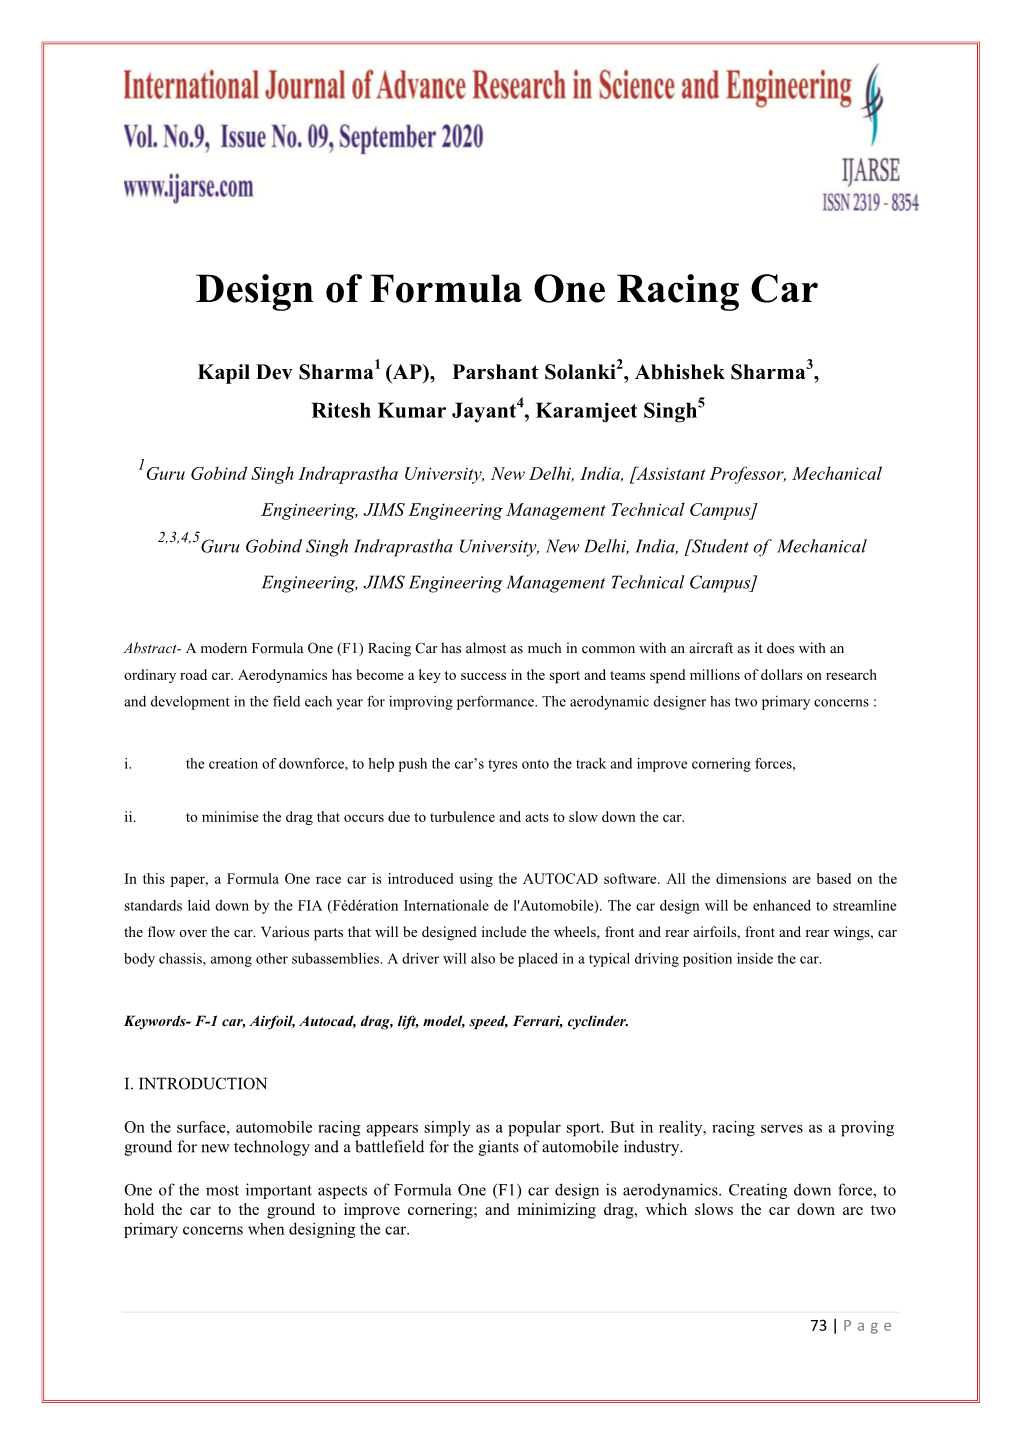 Design of Formula One Racing Car